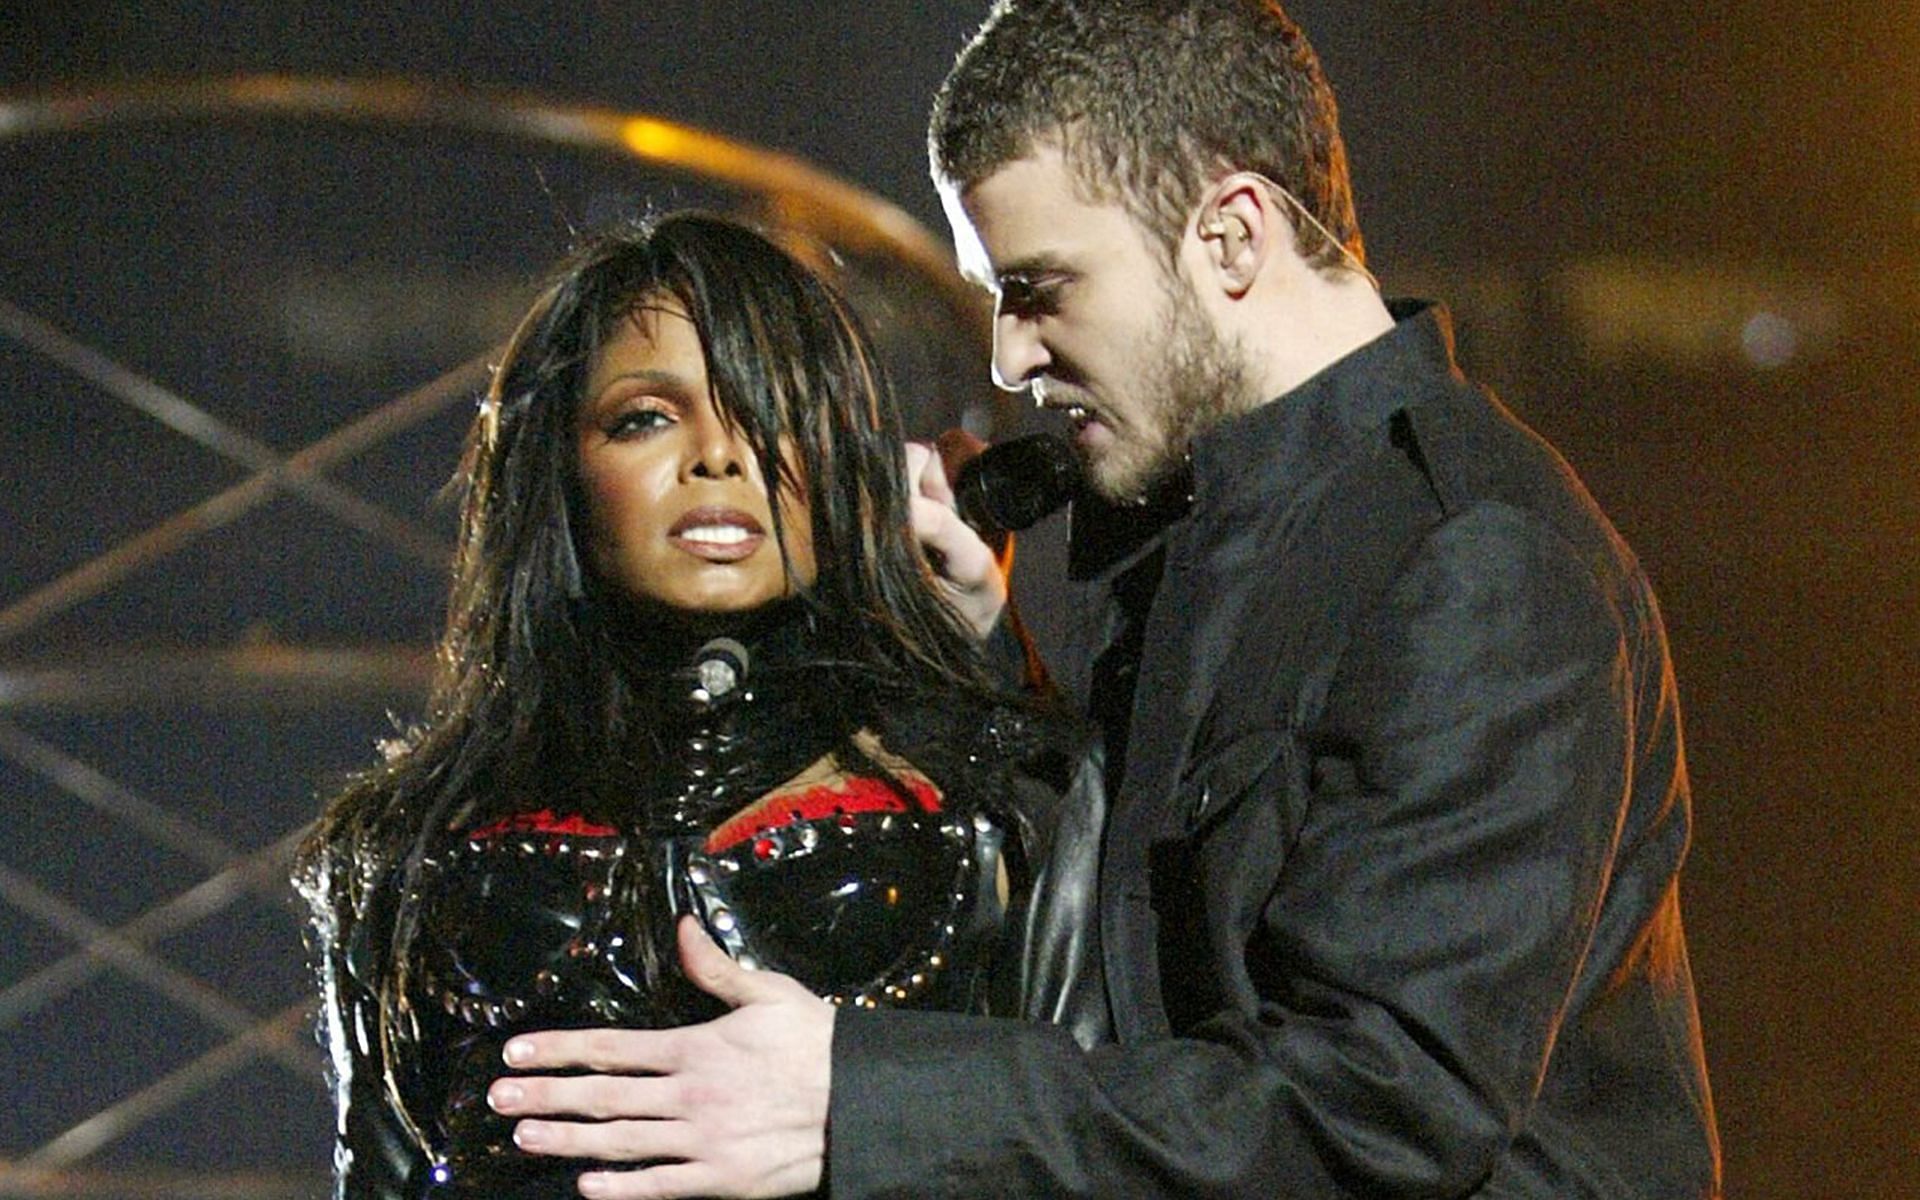 Justin Timberlake and Janet Jackson during 2004 Super Bowl performance (Image via today.com)